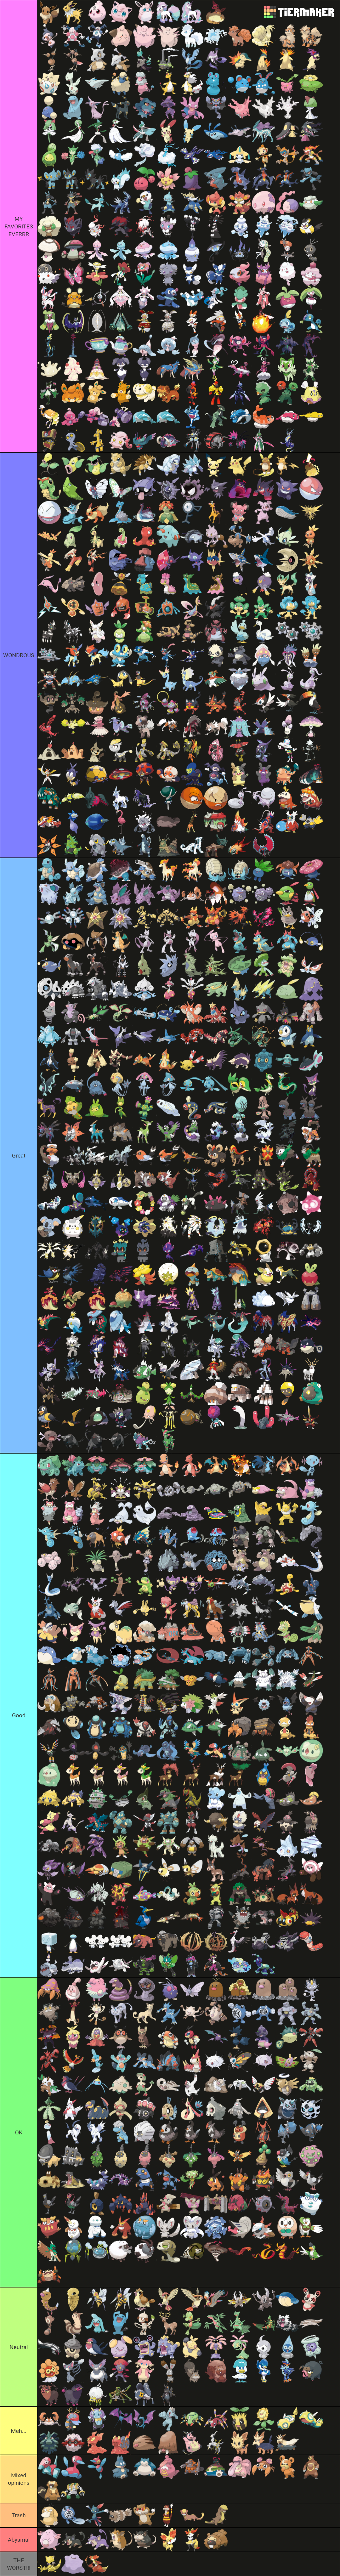 My Shiny Starter Pokemon Tier List by Wildcat1999 on DeviantArt